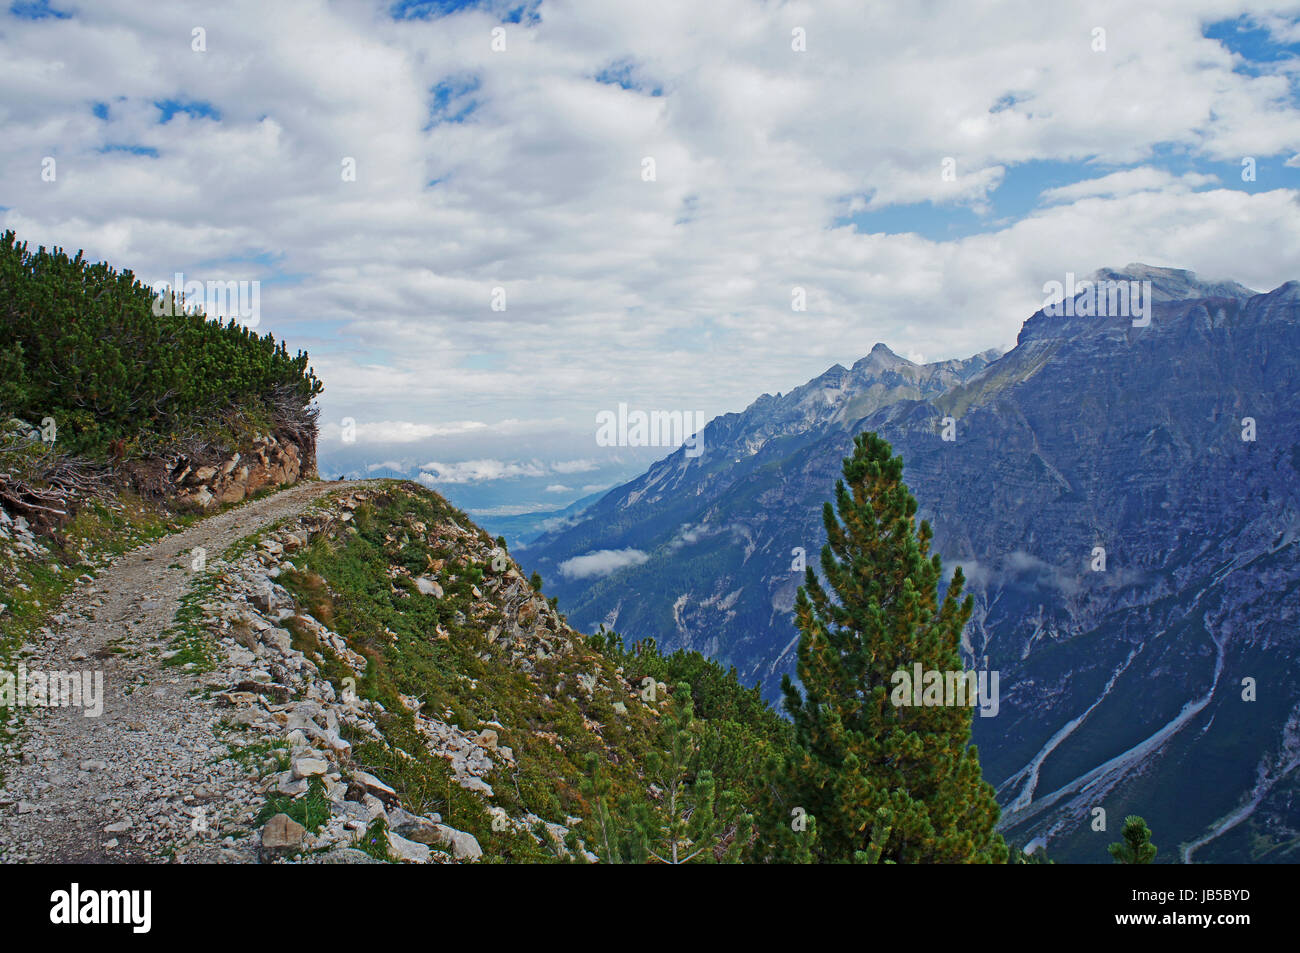 Wandern in den Stubaier Alpen in Tirol; schmaler Bergpfad im Hochgebirge Hiking in the Stubai Alps in Tyrol; narrow mountain path in the high mountains Stock Photo